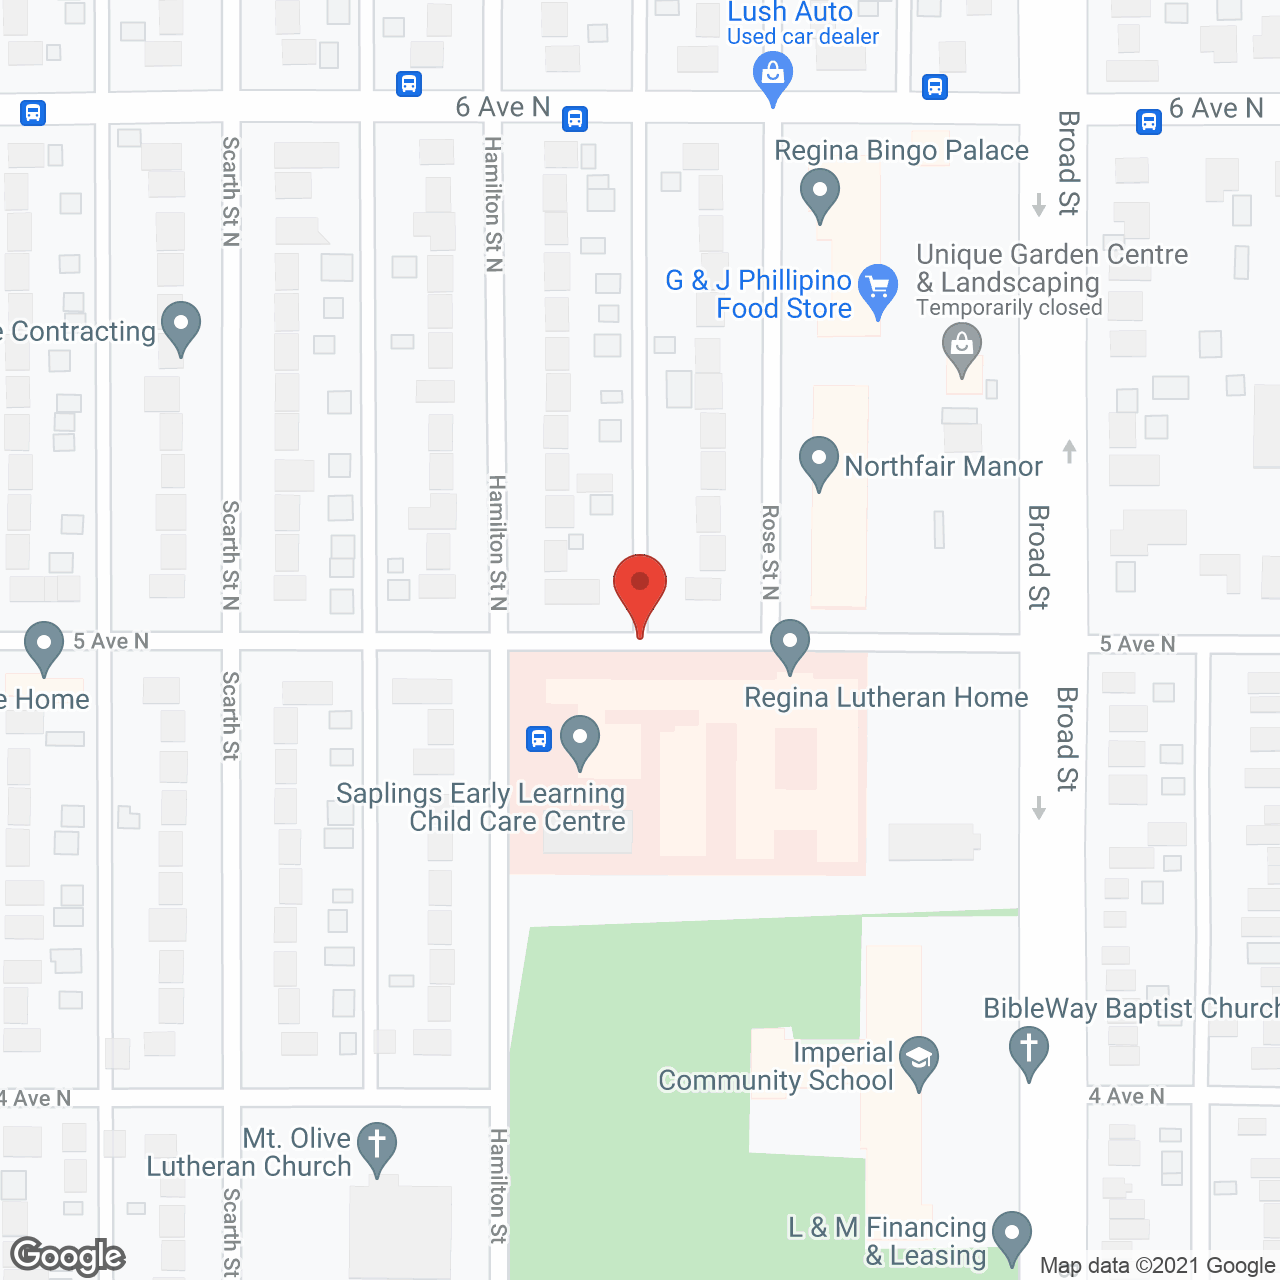 Regina Lutheran Home in google map